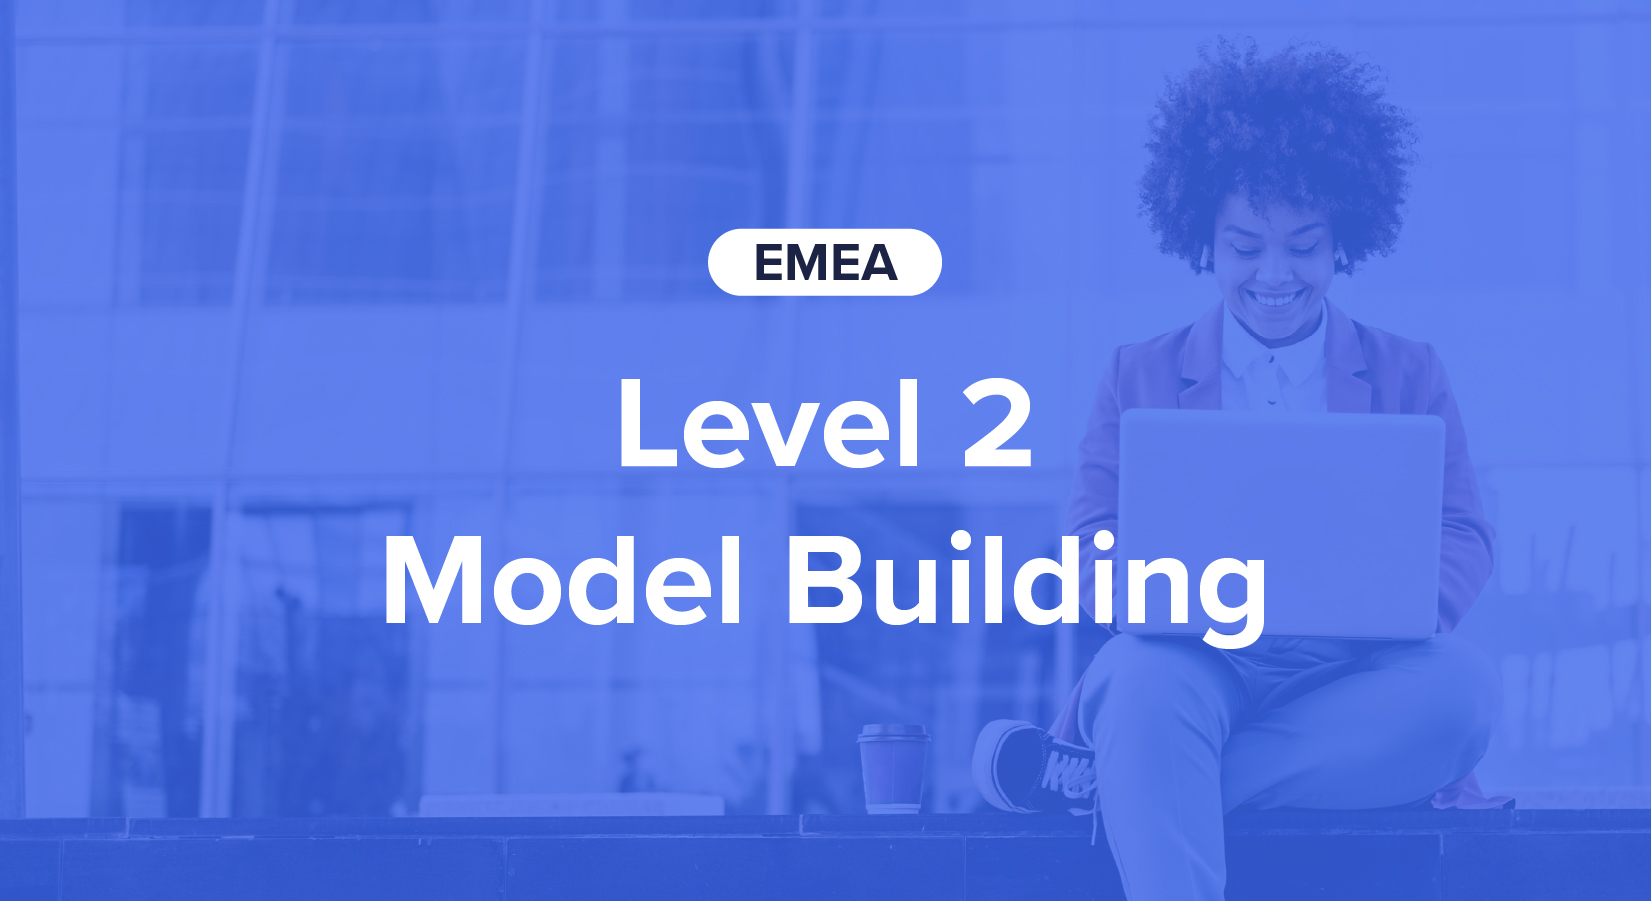 Academy Level 2 Model Building EMEA